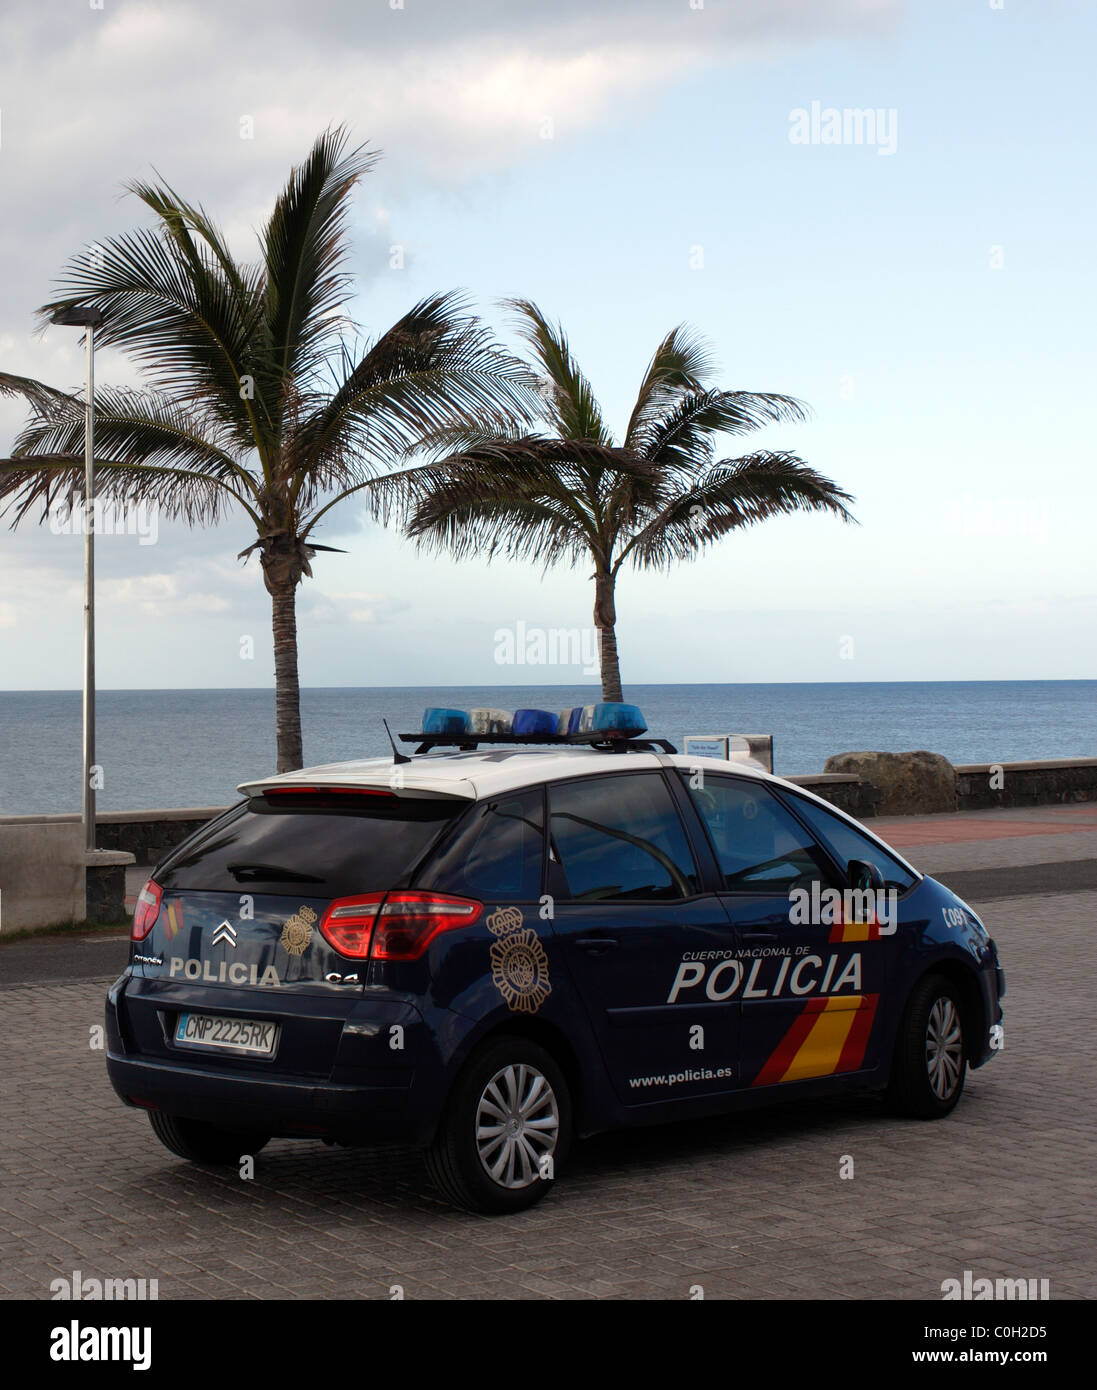 SPANISH POLICE CAR AT MASPALOMAS ON THE CANARY ISLAND OF GRAN CANARIA. Stock Photo